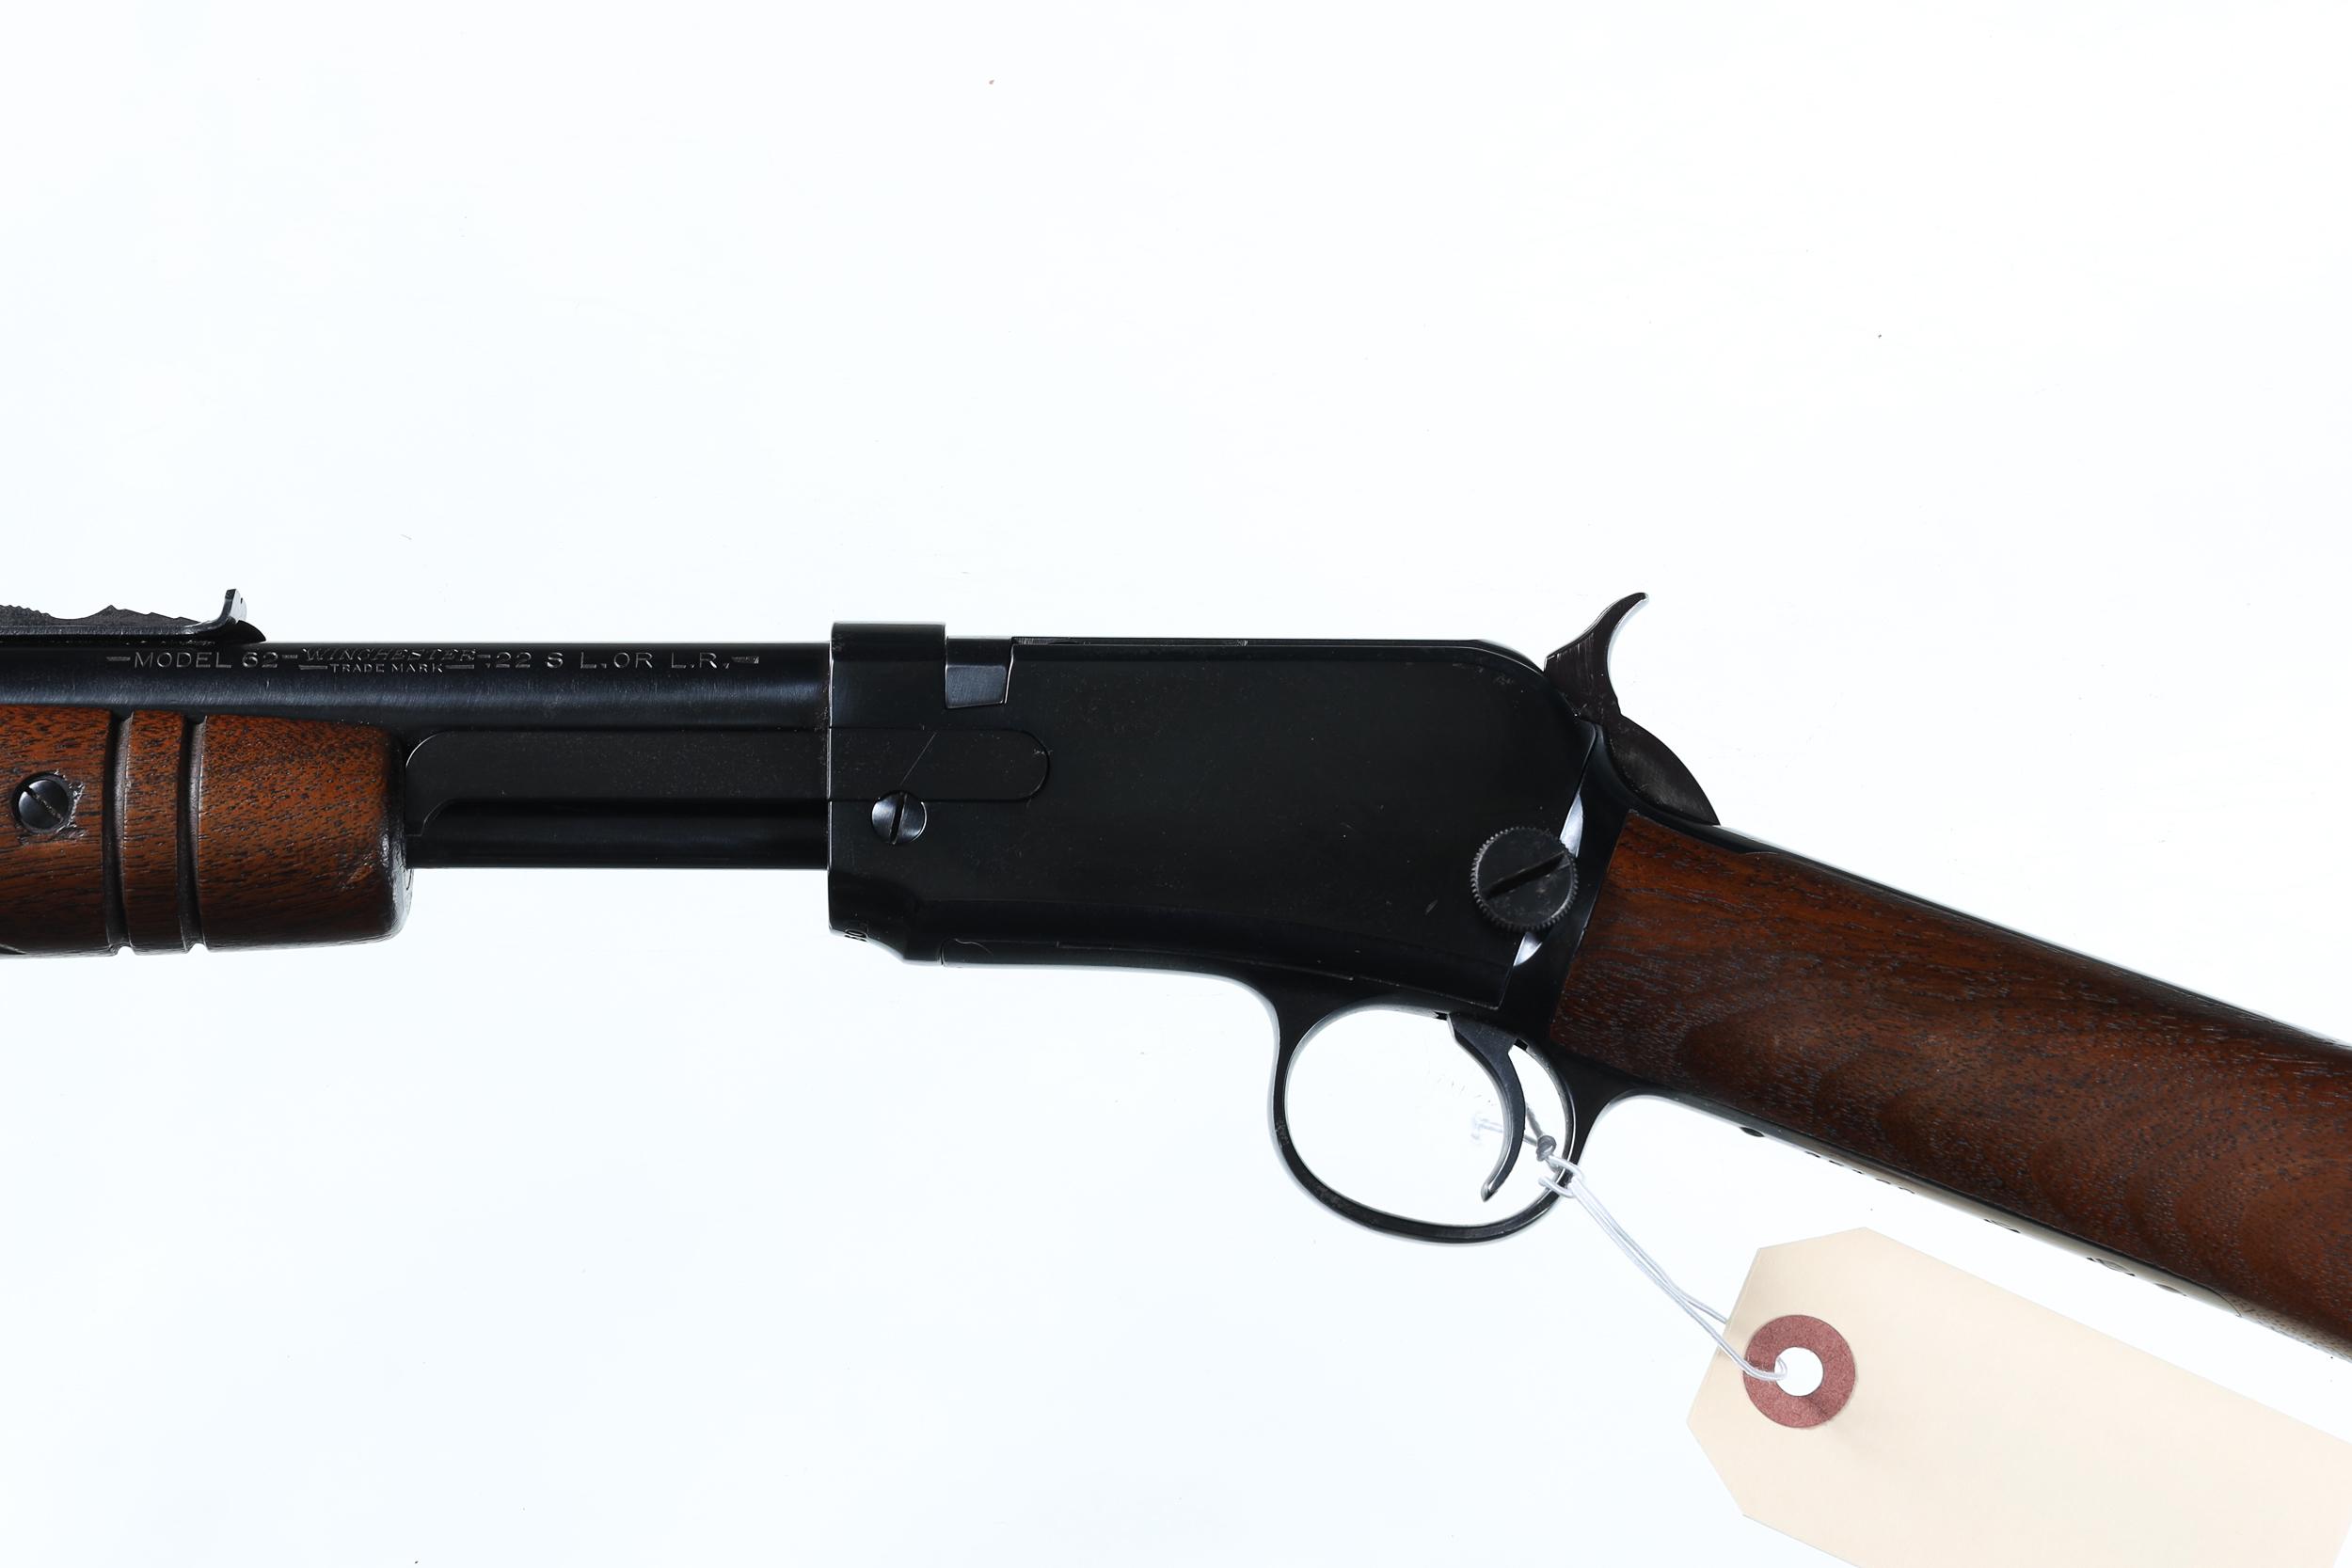 Winchester 62 Slide Rifle .22 sllr